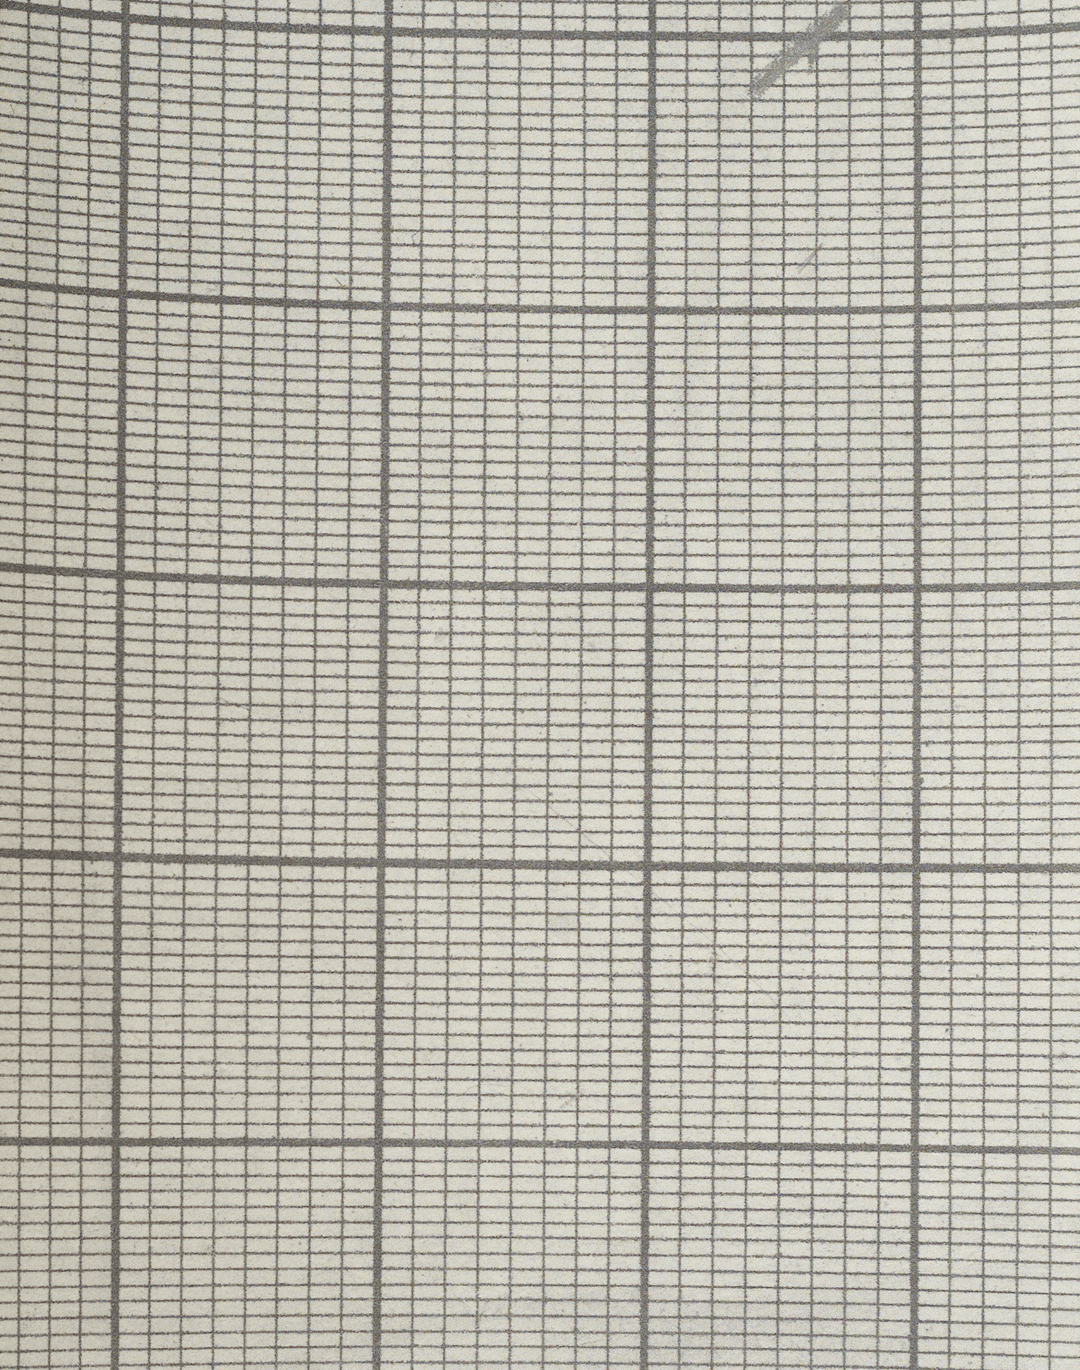 Knitting Grid Paper